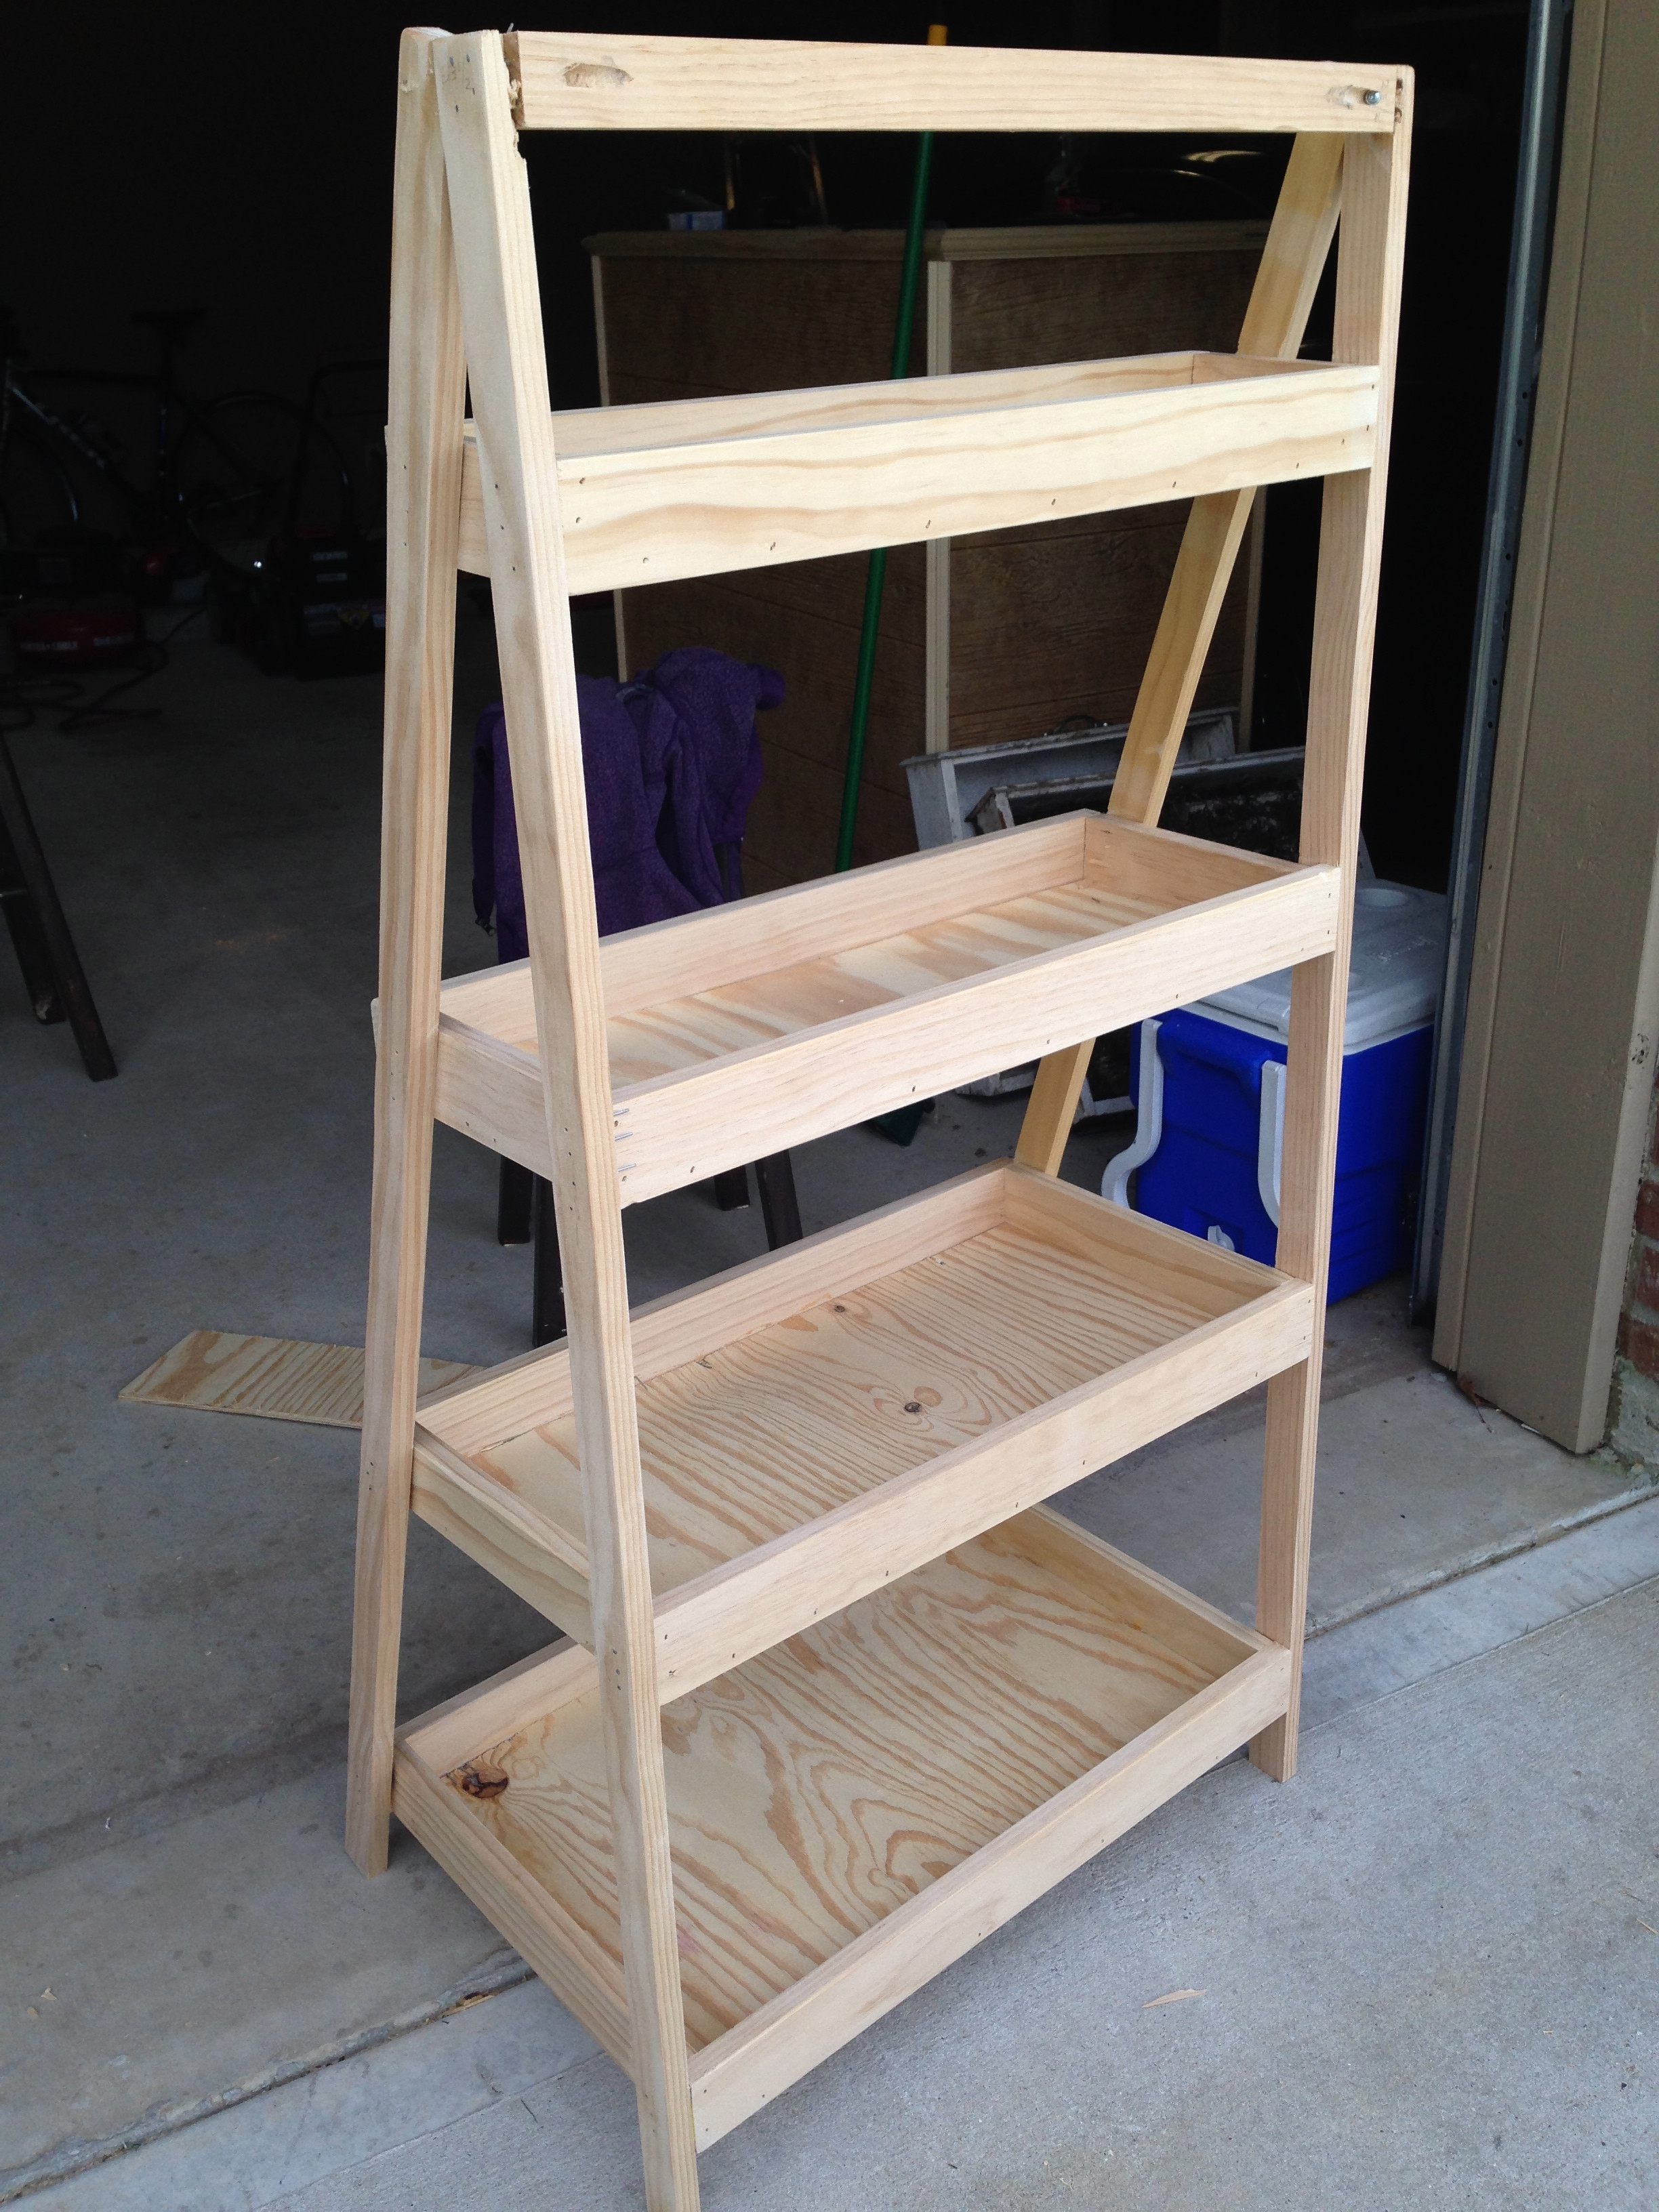 Best ideas about Ladder Shelf DIY
. Save or Pin DIY Painter’s Ladder Shelf Now.